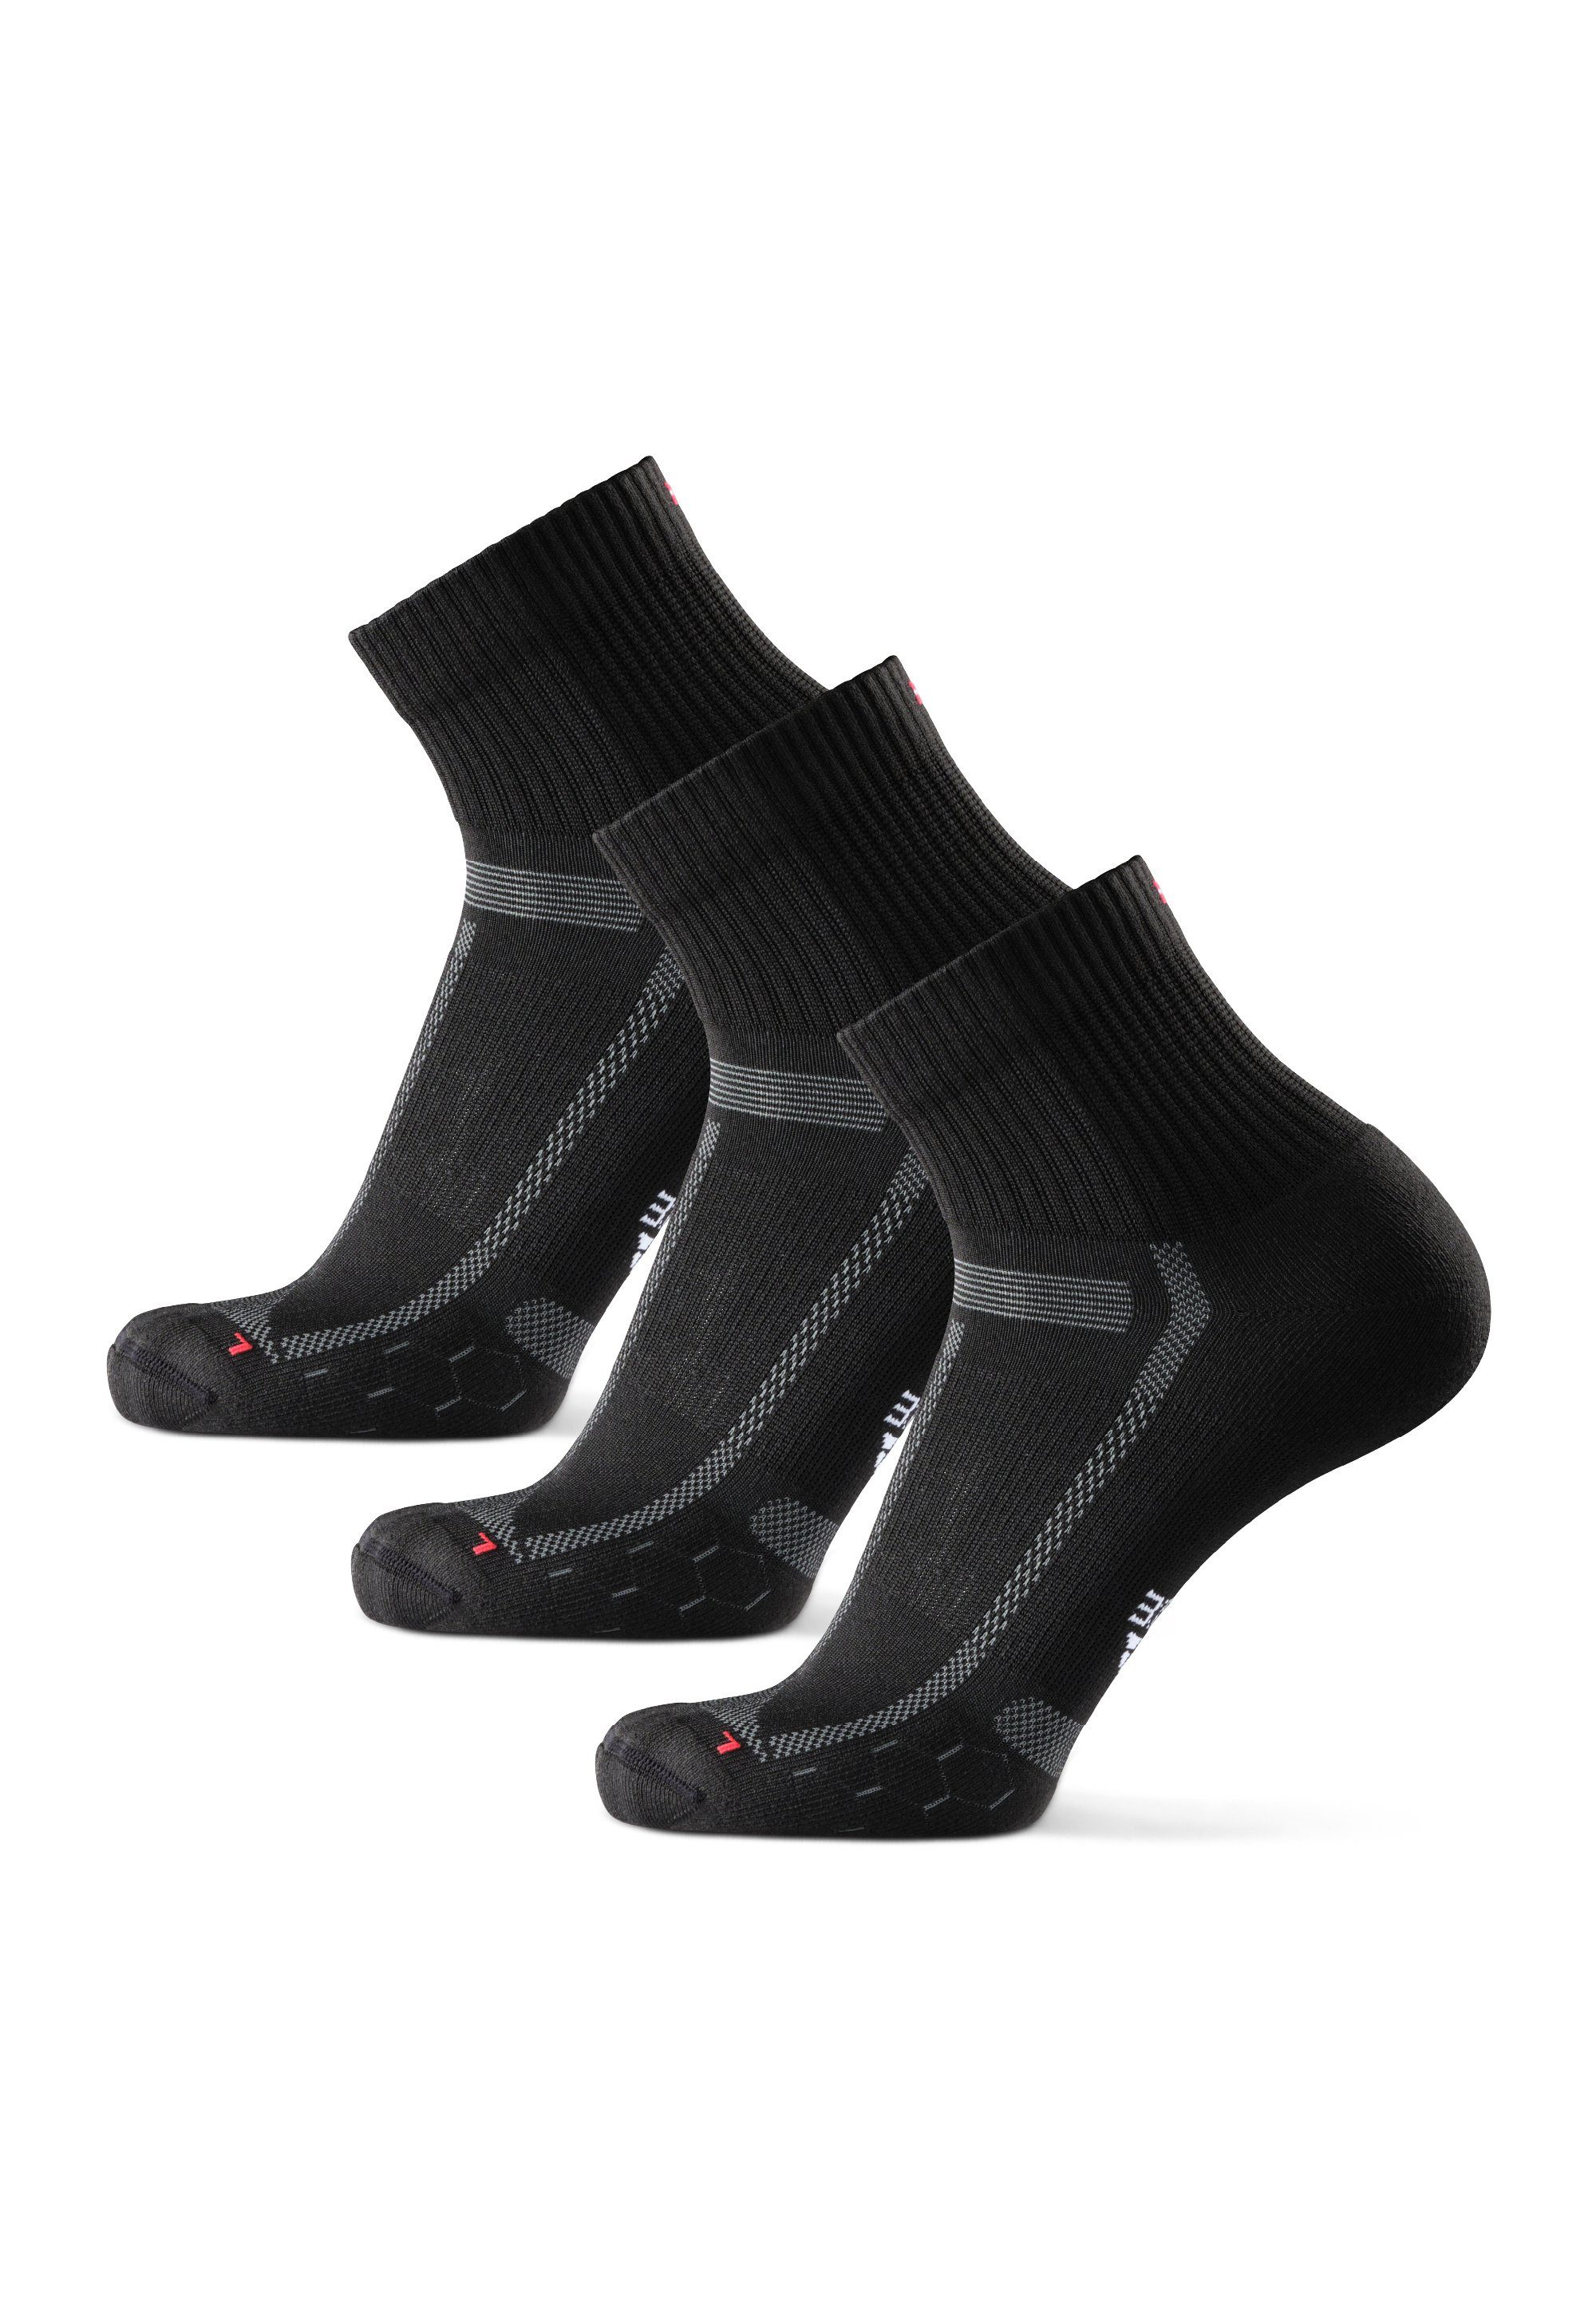 DANISH Technisch Distance Anti-Blasen, Black/Grey Laufsocken Socks ENDURANCE Long Running (Packung, 3-Paar)